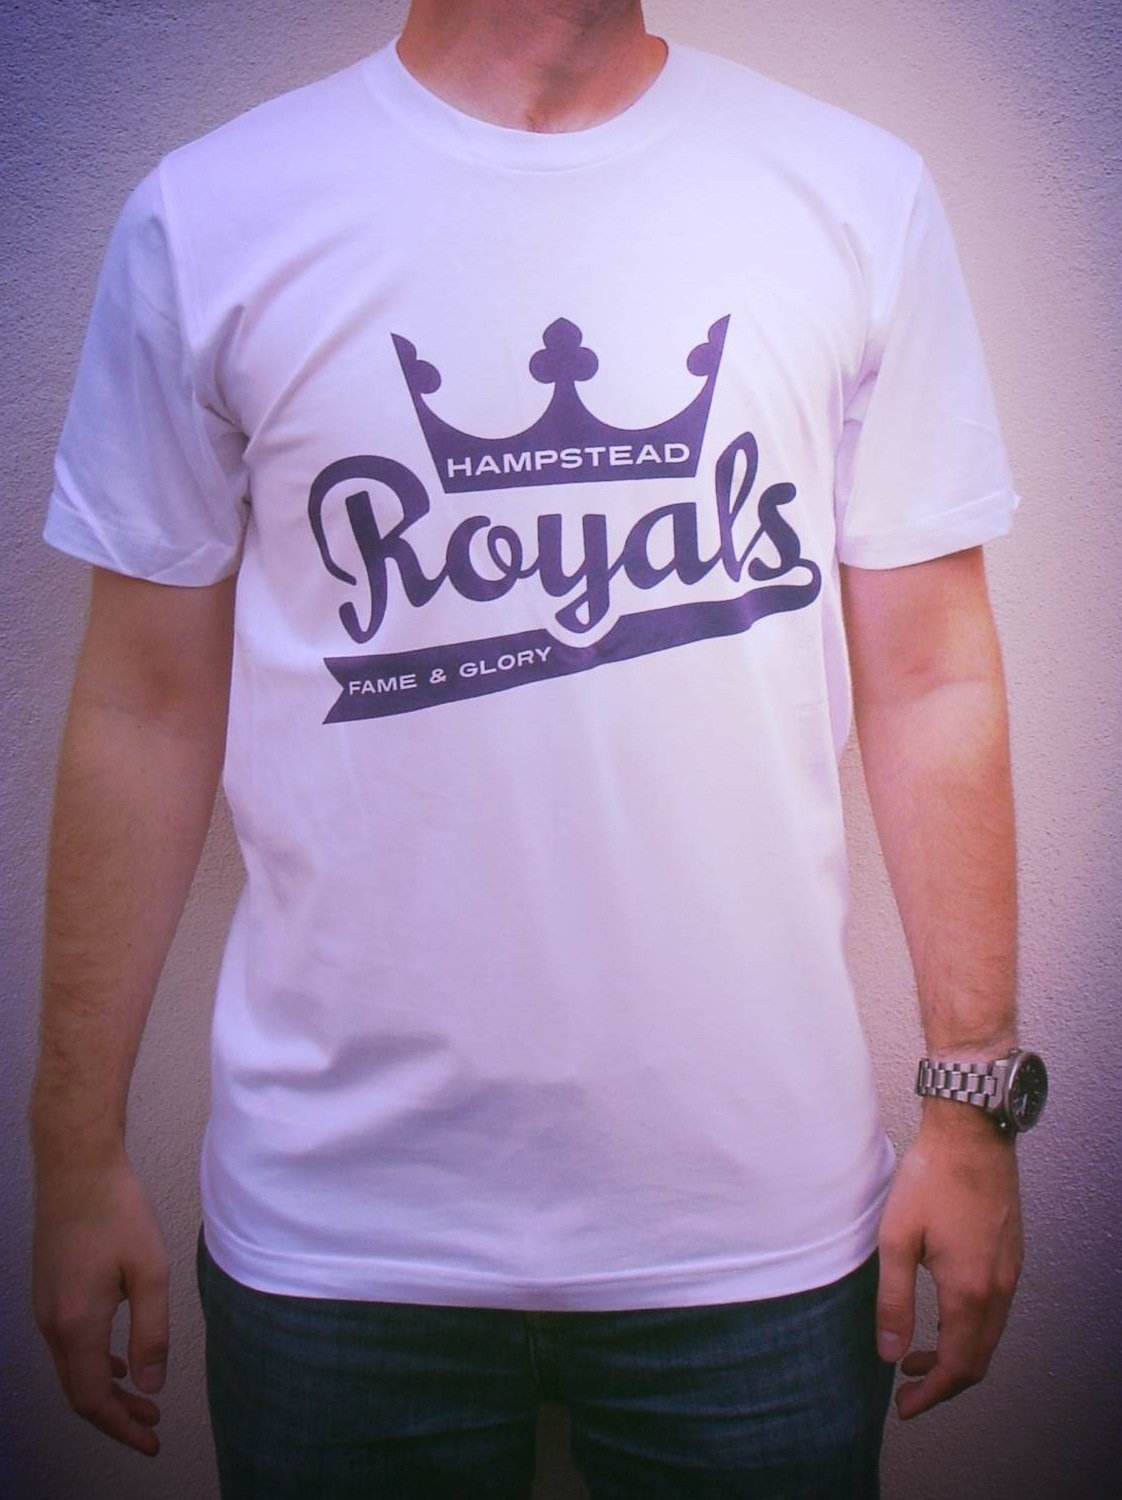 Image of Hampstead Royals - Premier Cru Edition (White)